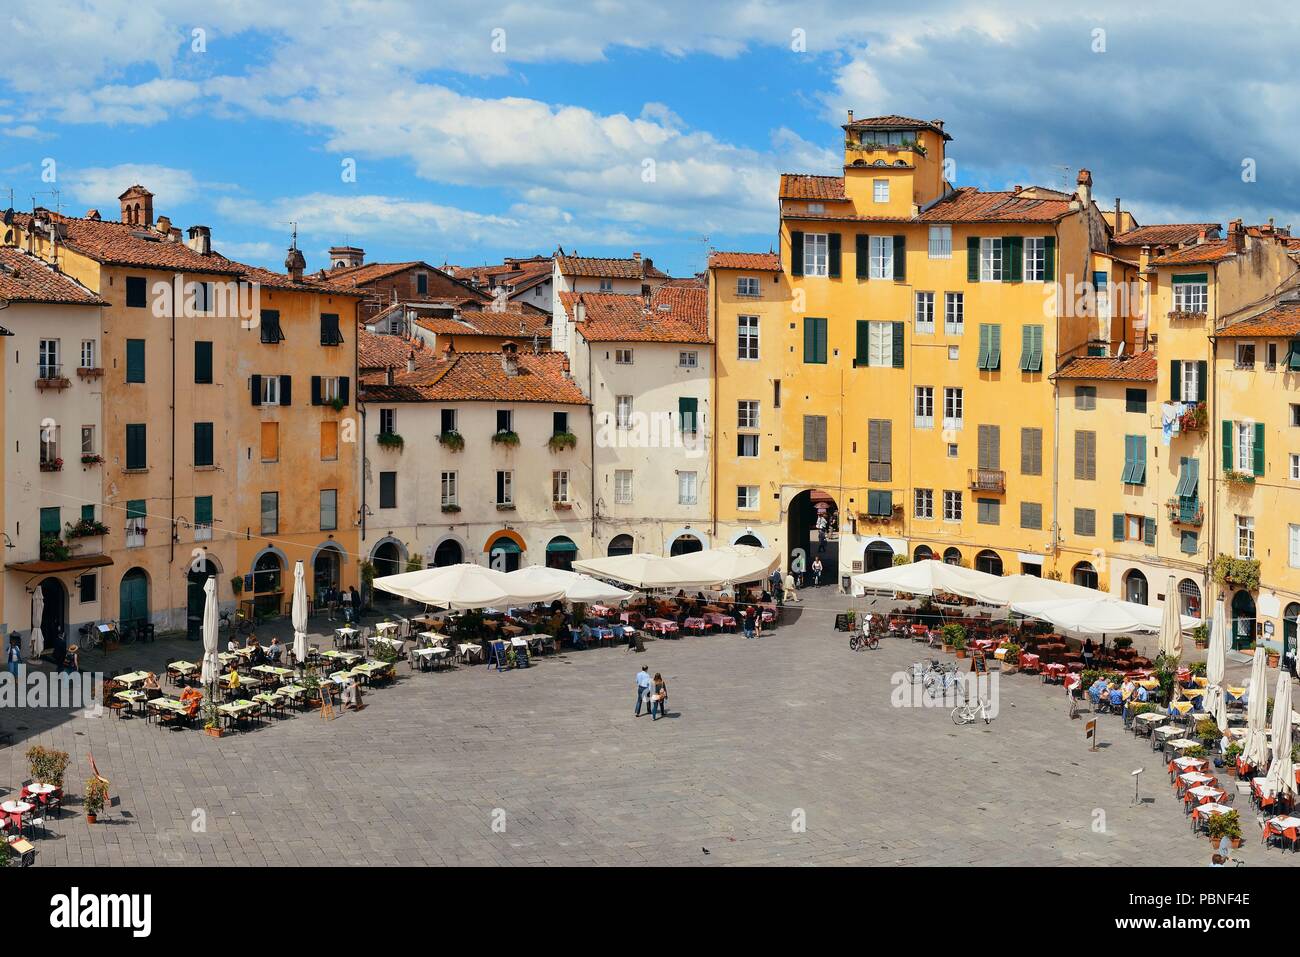 Piazza dell Anfiteatro in Lucca Italy Stock Photo - Alamy